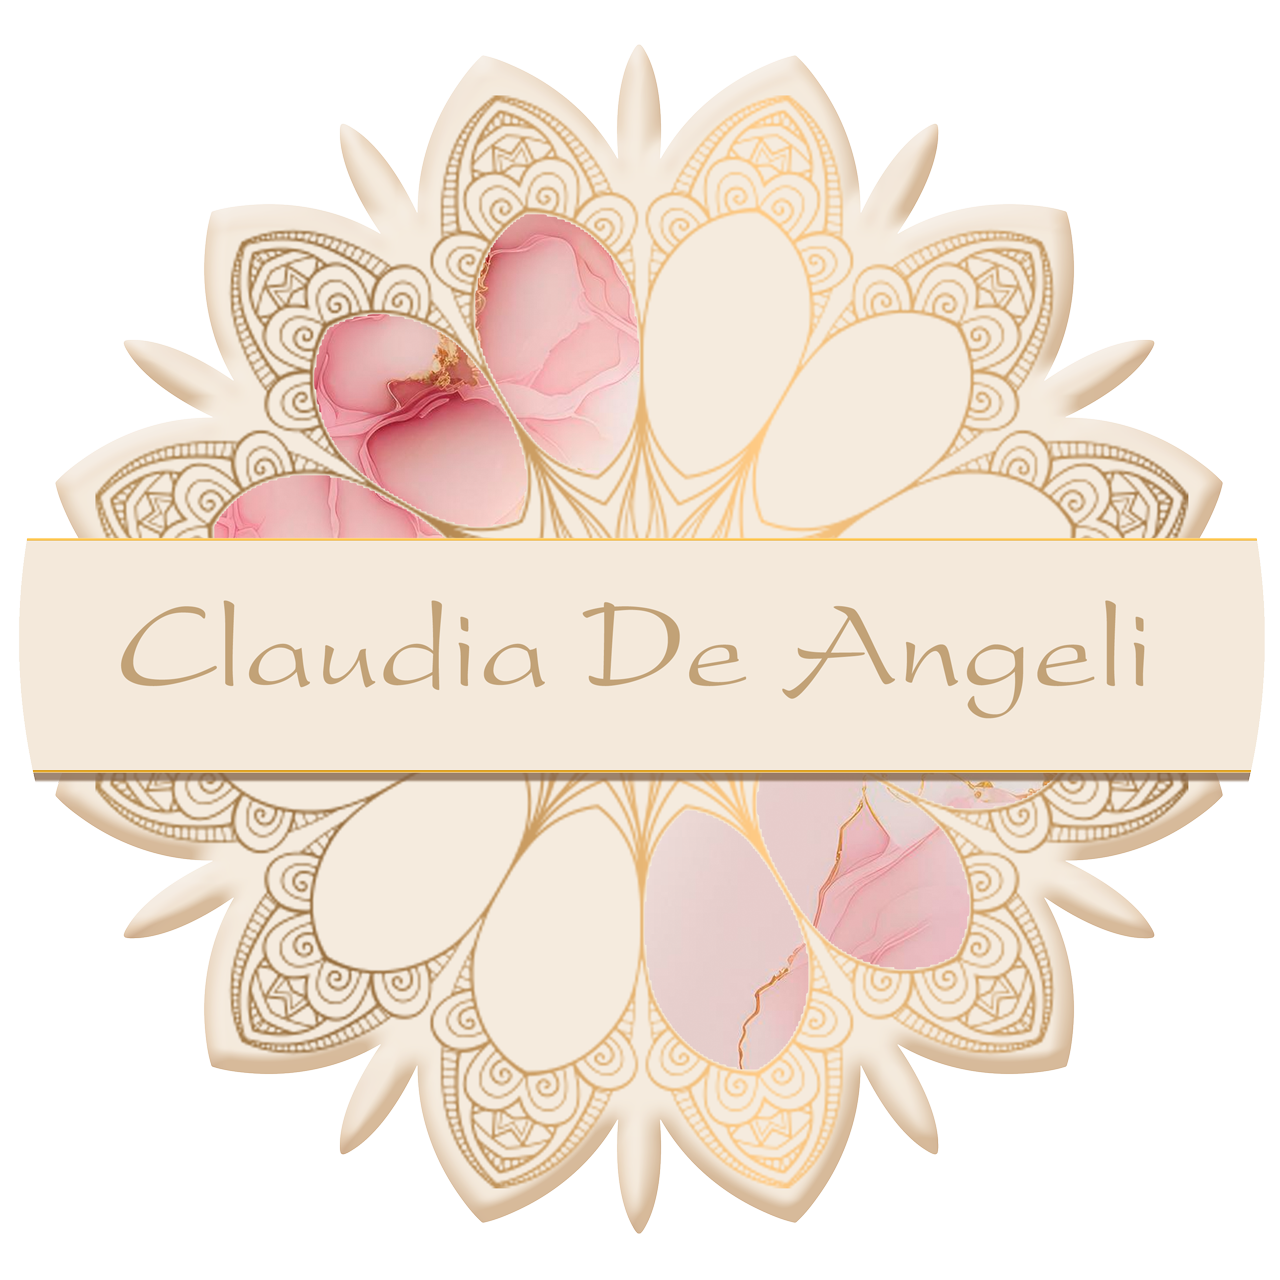 Claudia De Angeli